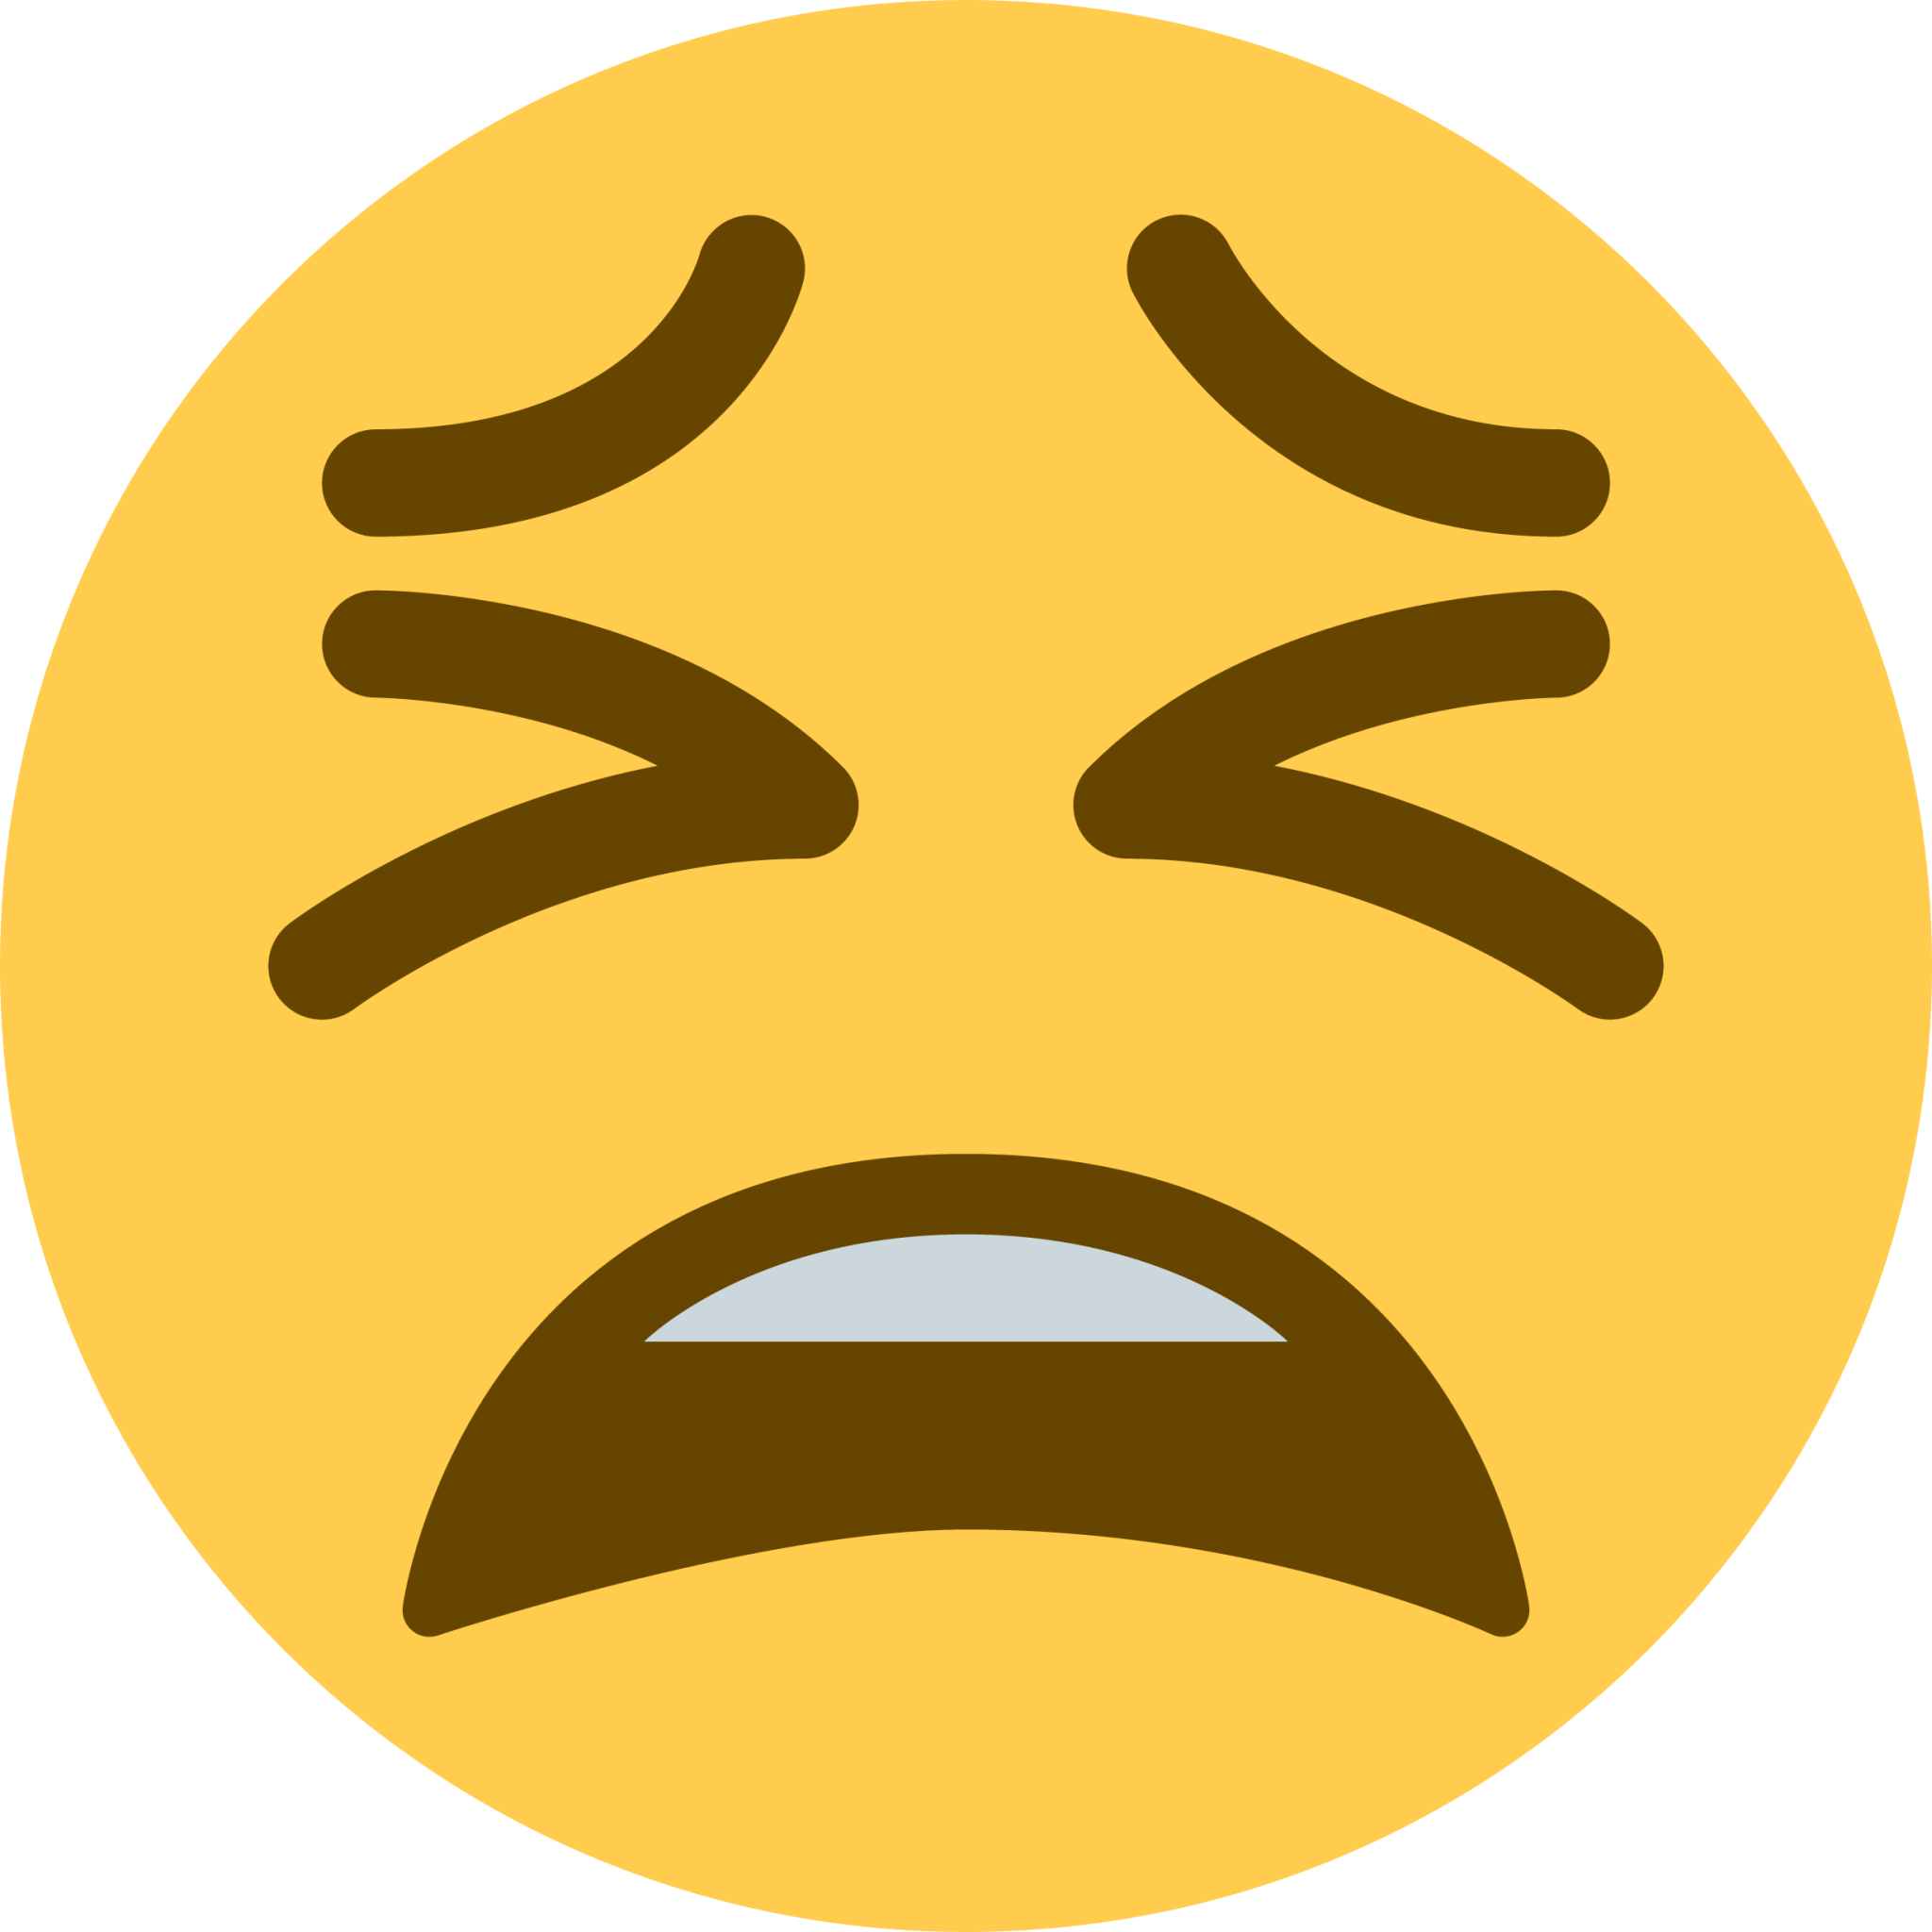 tired face emoji